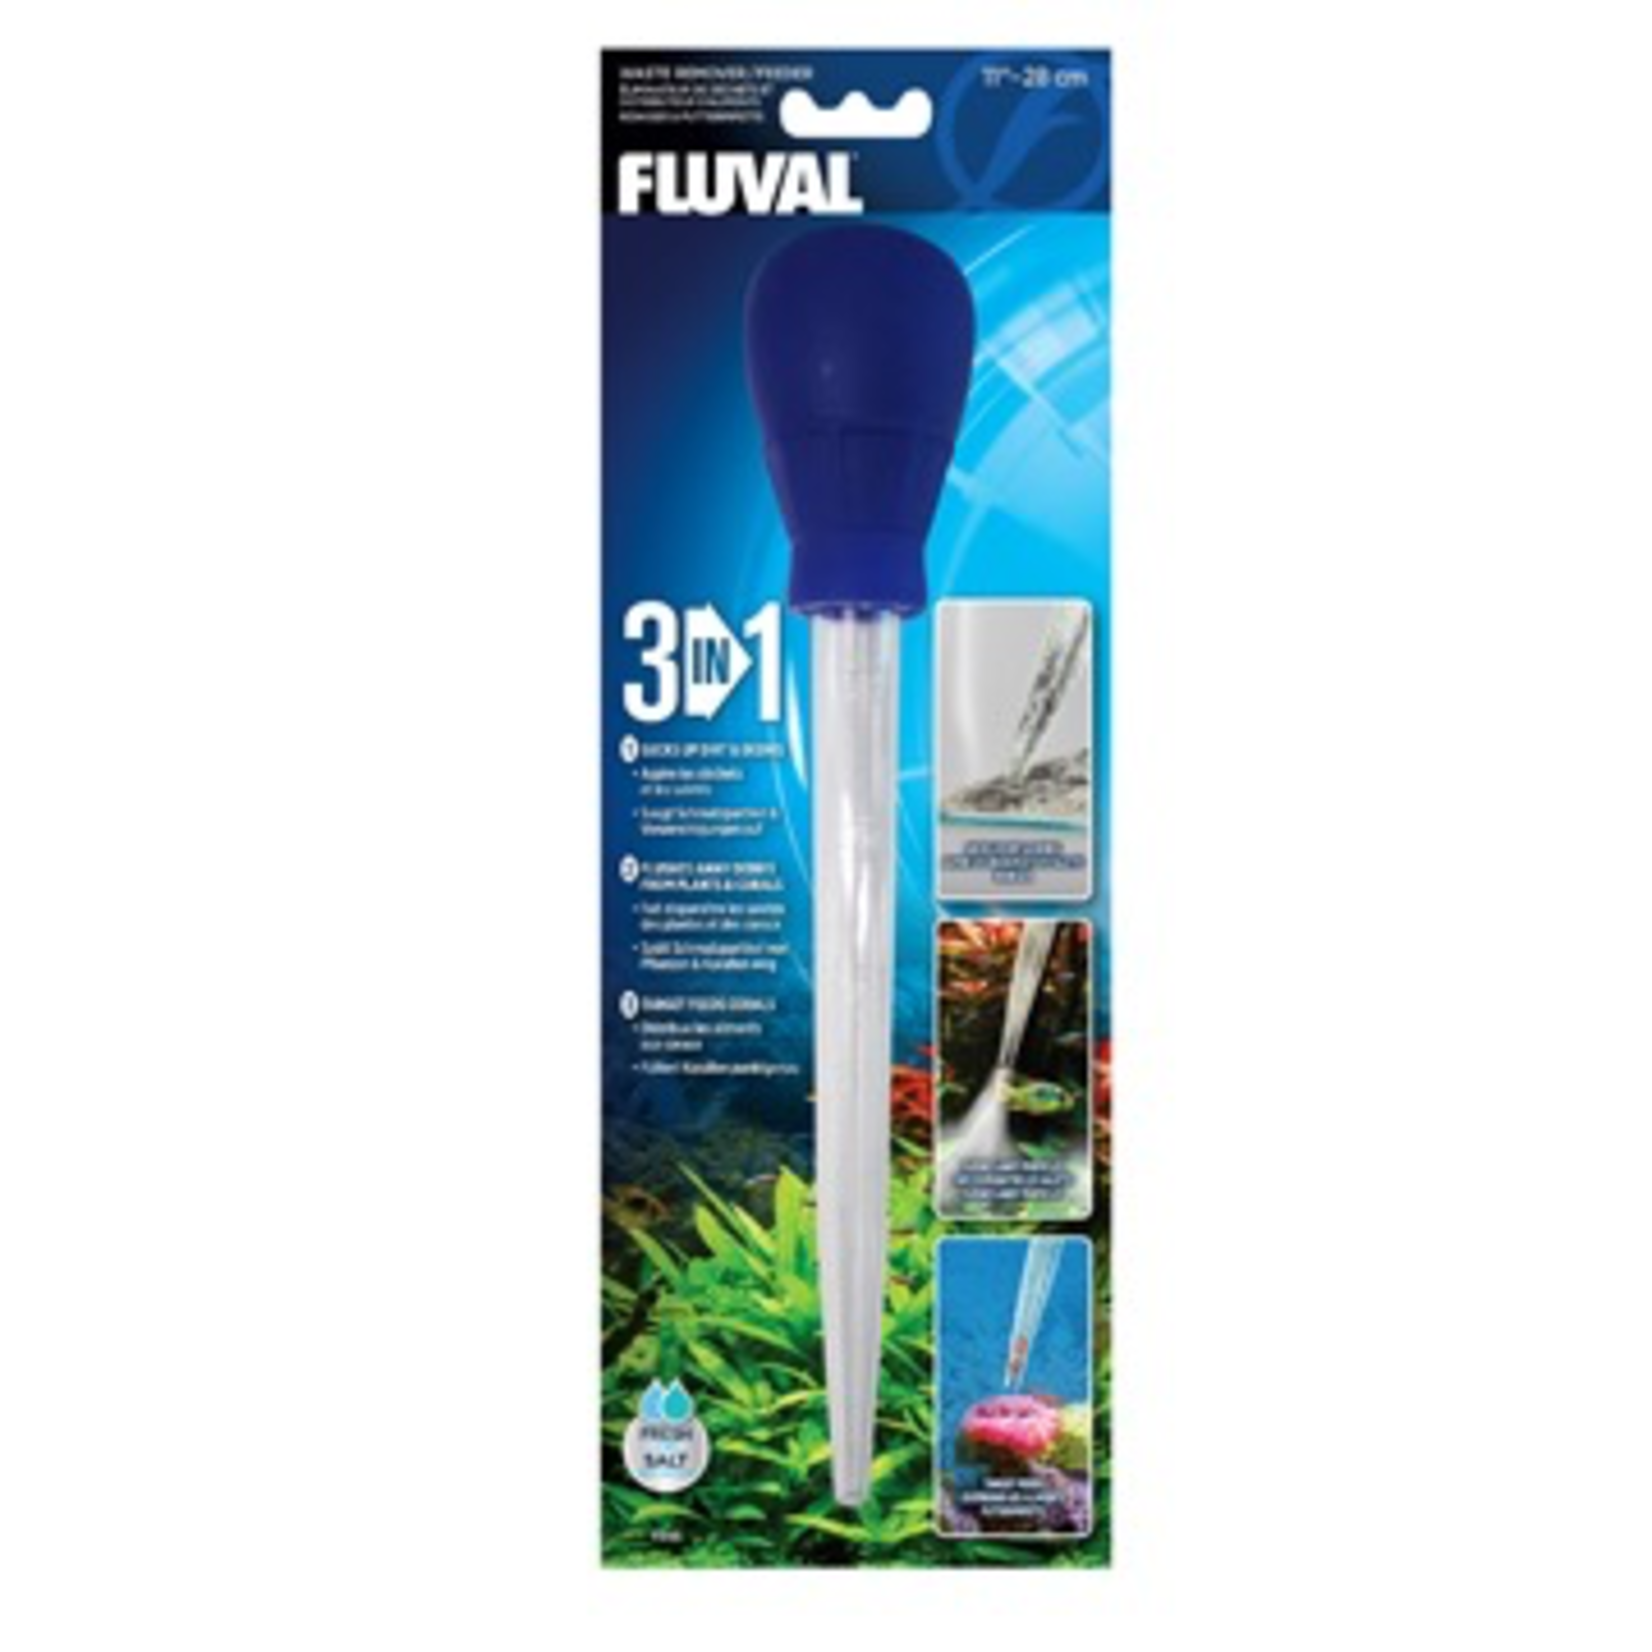 FLUVAL Fluval 3-in-1 Waste Remover/ Feeder - 28 cm (11in)